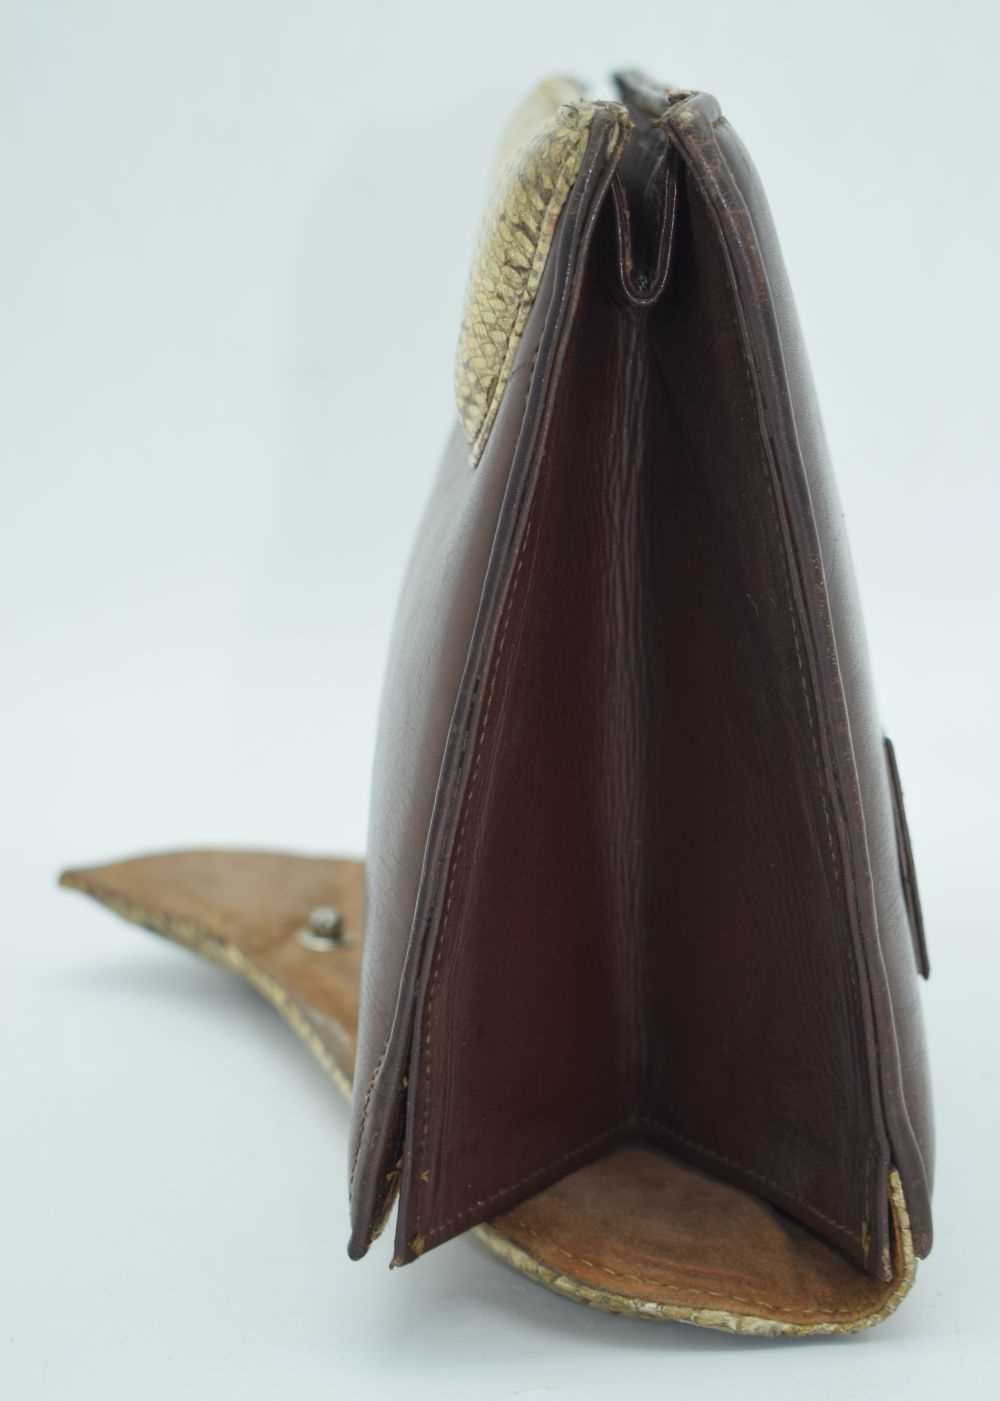 A Vintage ladies snakeskin effect leather clutch bag 26 x 19 cm. - Image 4 of 6